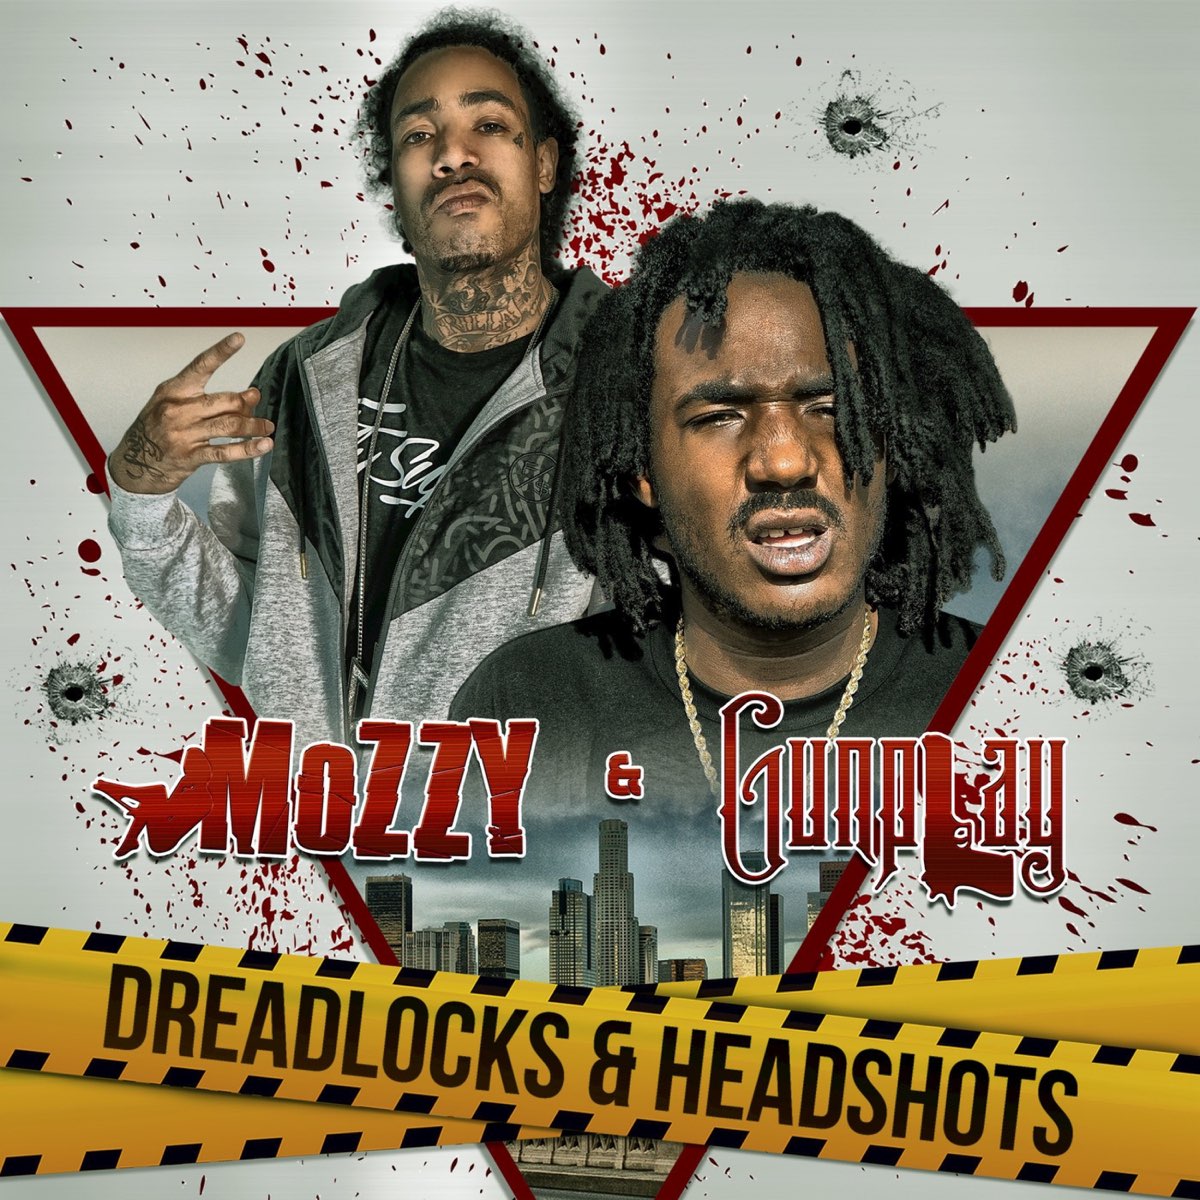 Mozzy & Gunplay - Dreadlocks & Headshots